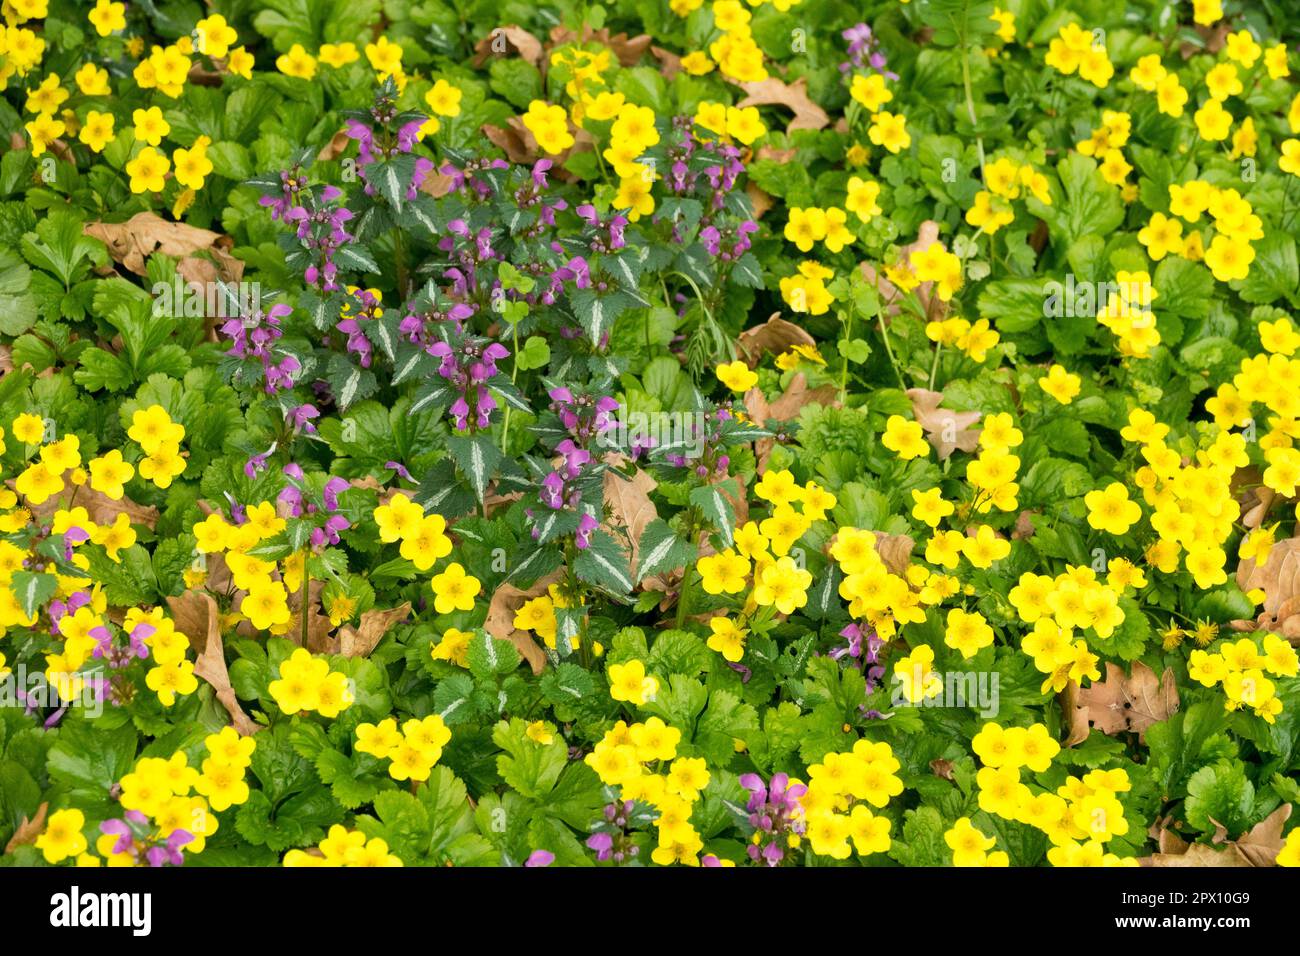 Waldsteinia, Lamium, Spotted dead Nettle, Lamium maculatum, Yellow, Flowers, Ground cover, Waldsteinia ternata Stock Photo